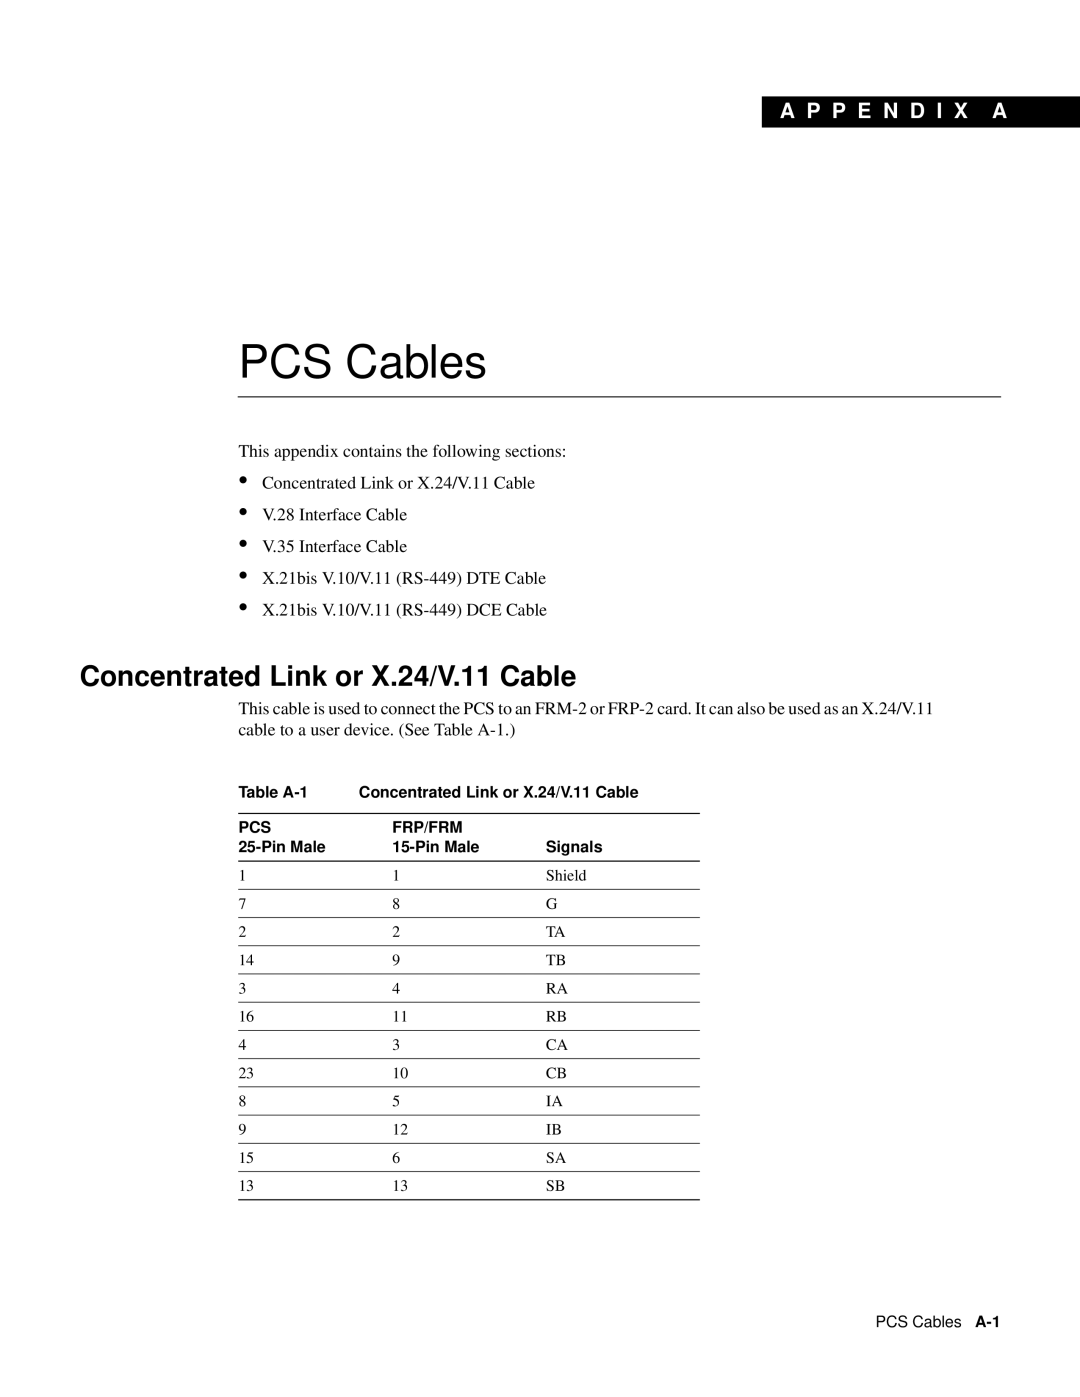 Cisco Systems appendix Concentrated Link or X.24/V.11 Cable, PCS Cables, A P P E N D I X A 